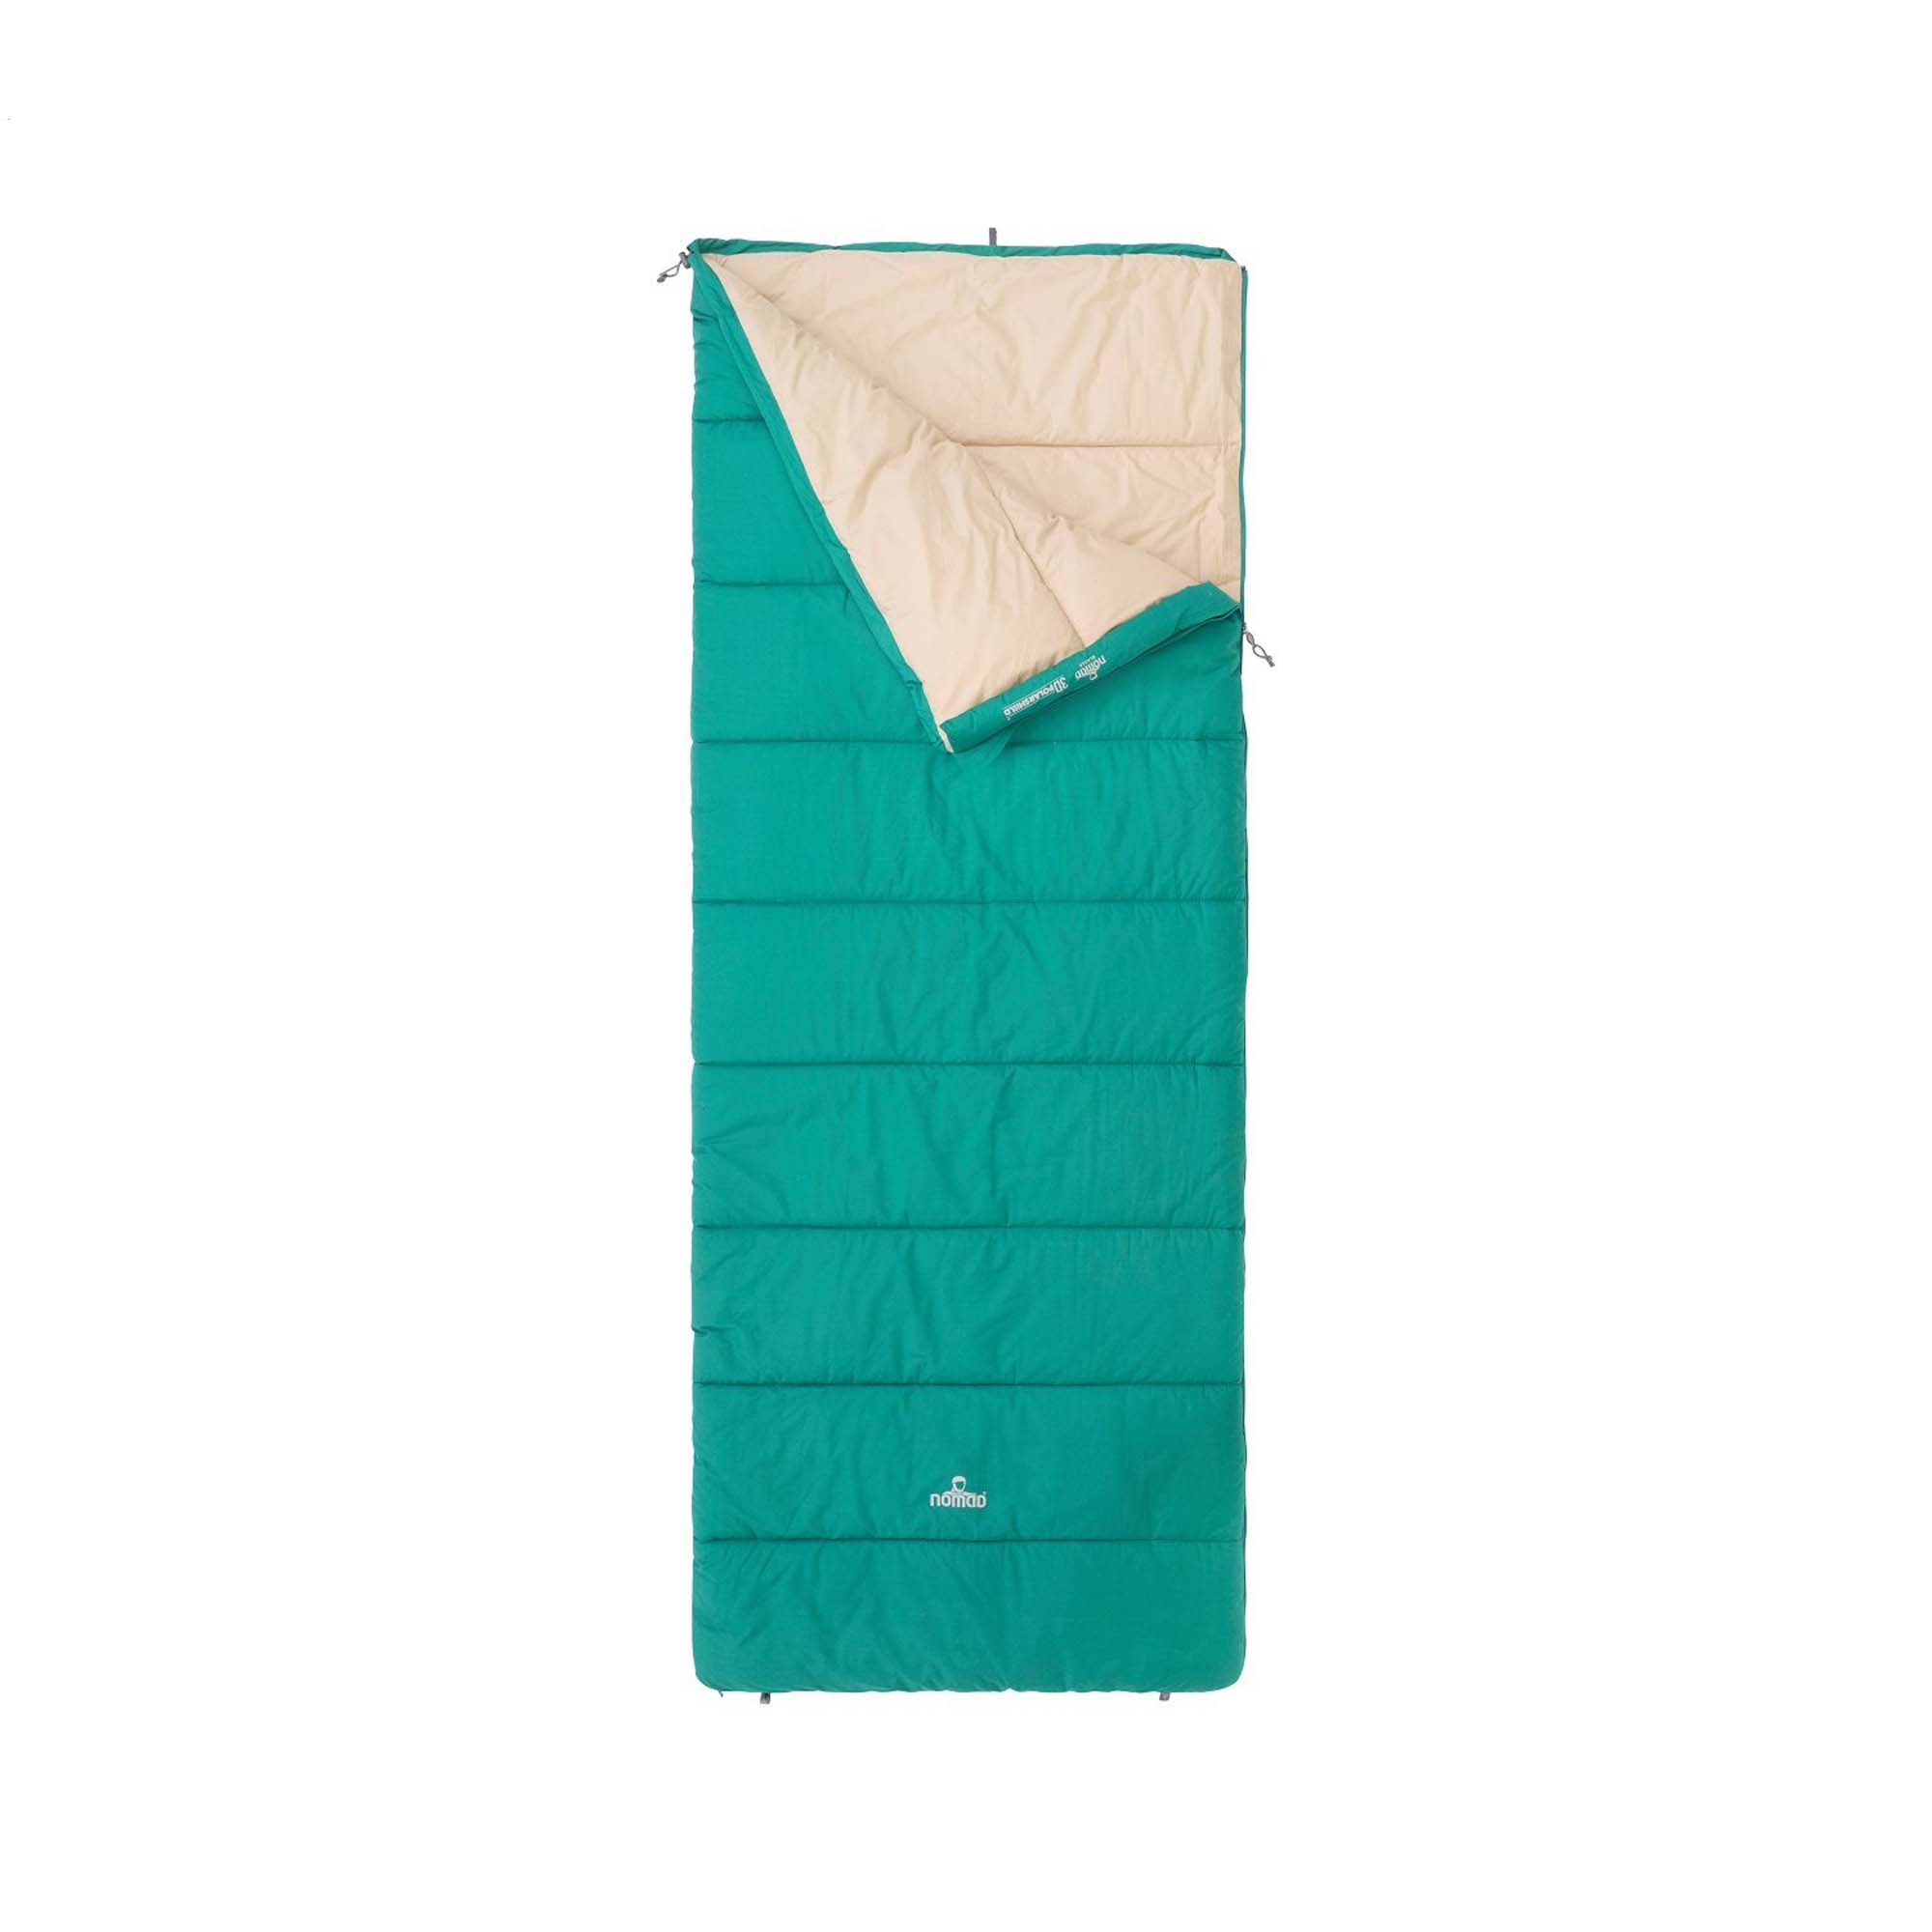 NOMAD Blazer sleeping bag